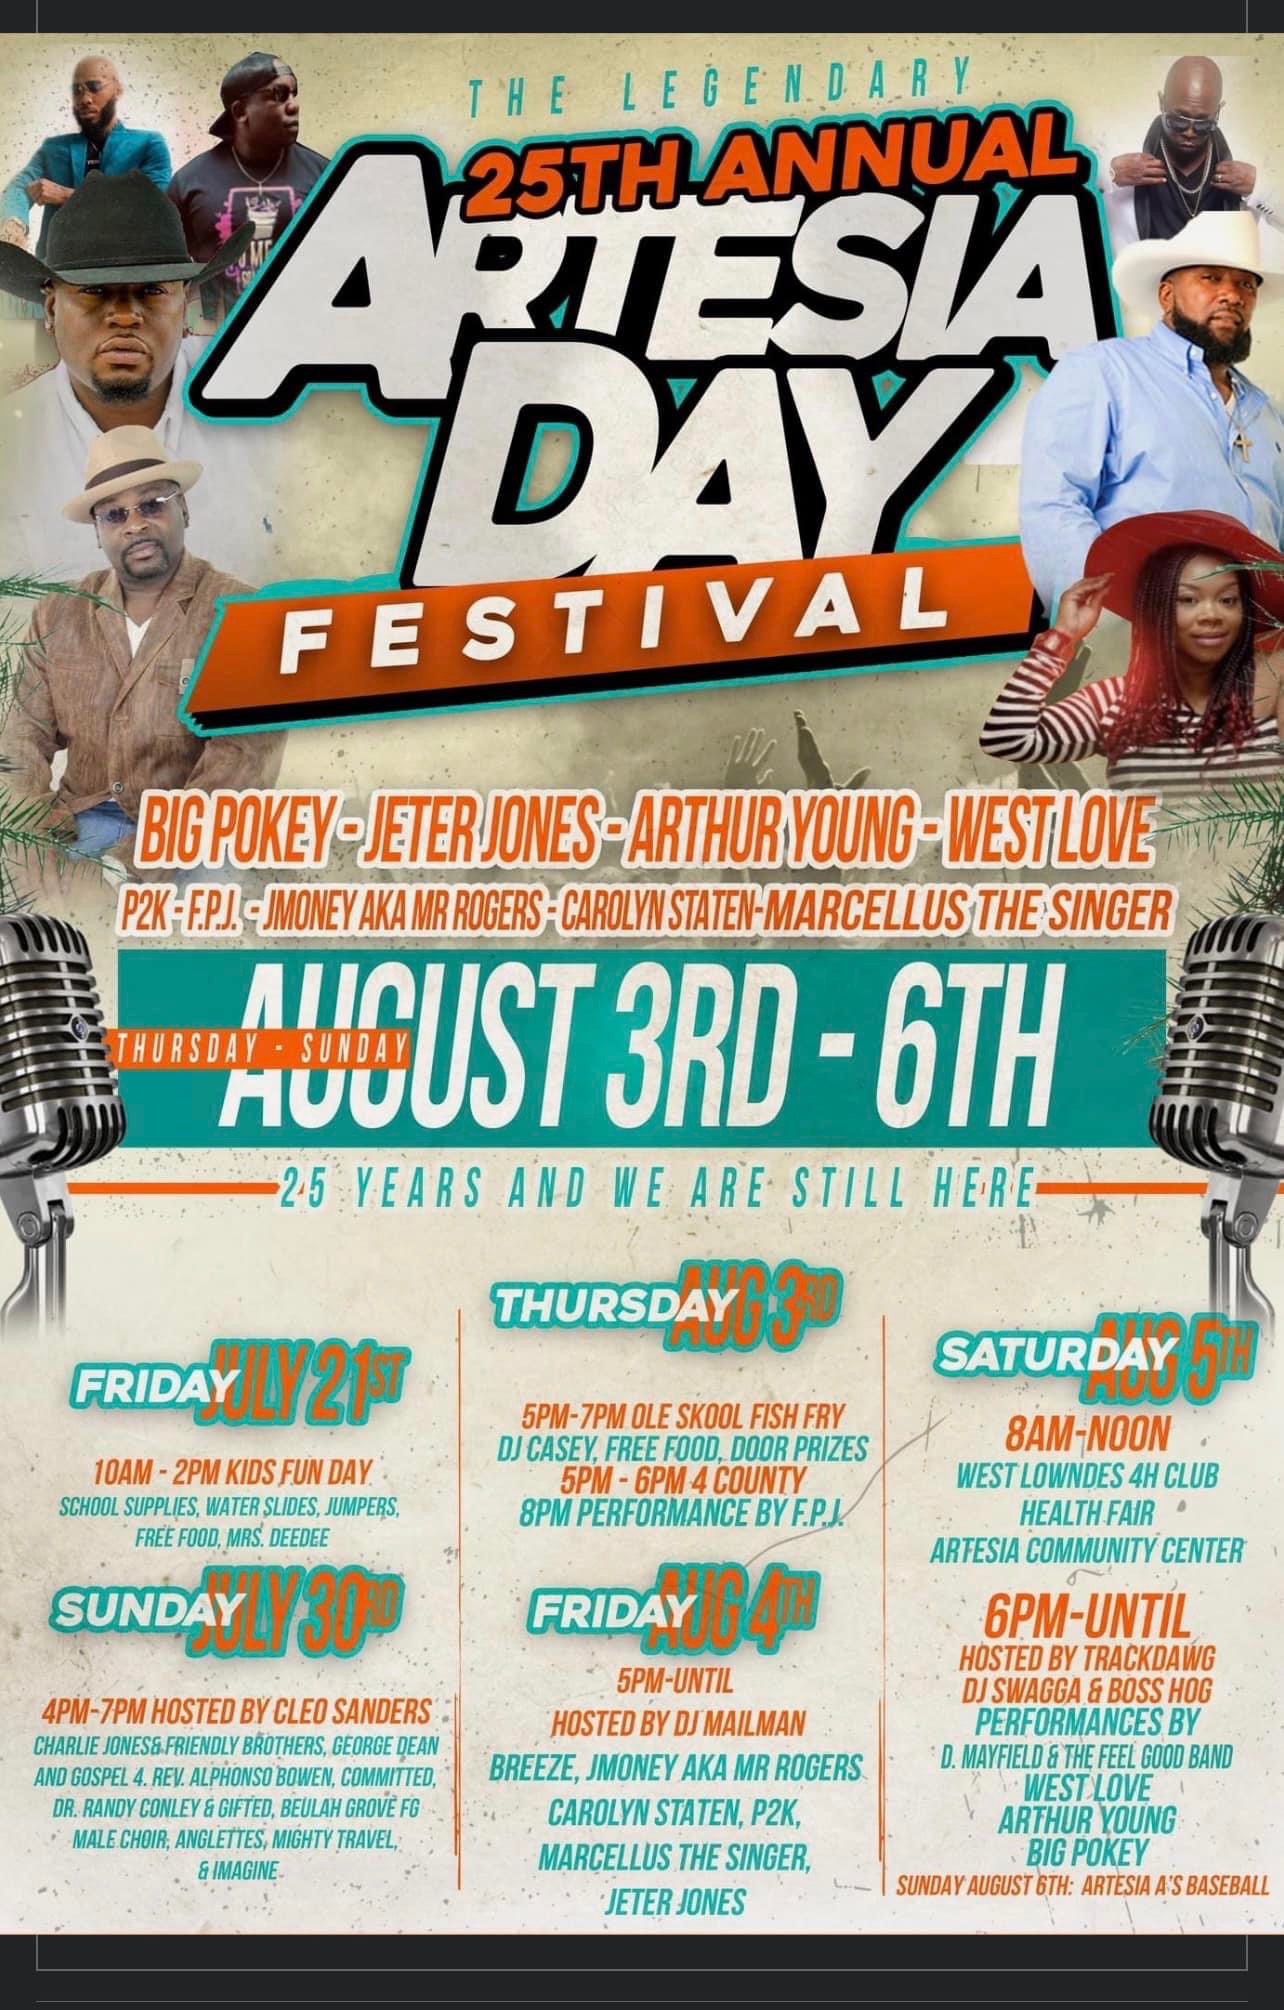 The Legendary 25th Artesia Day Festival Quiet Money Radio Tha 1